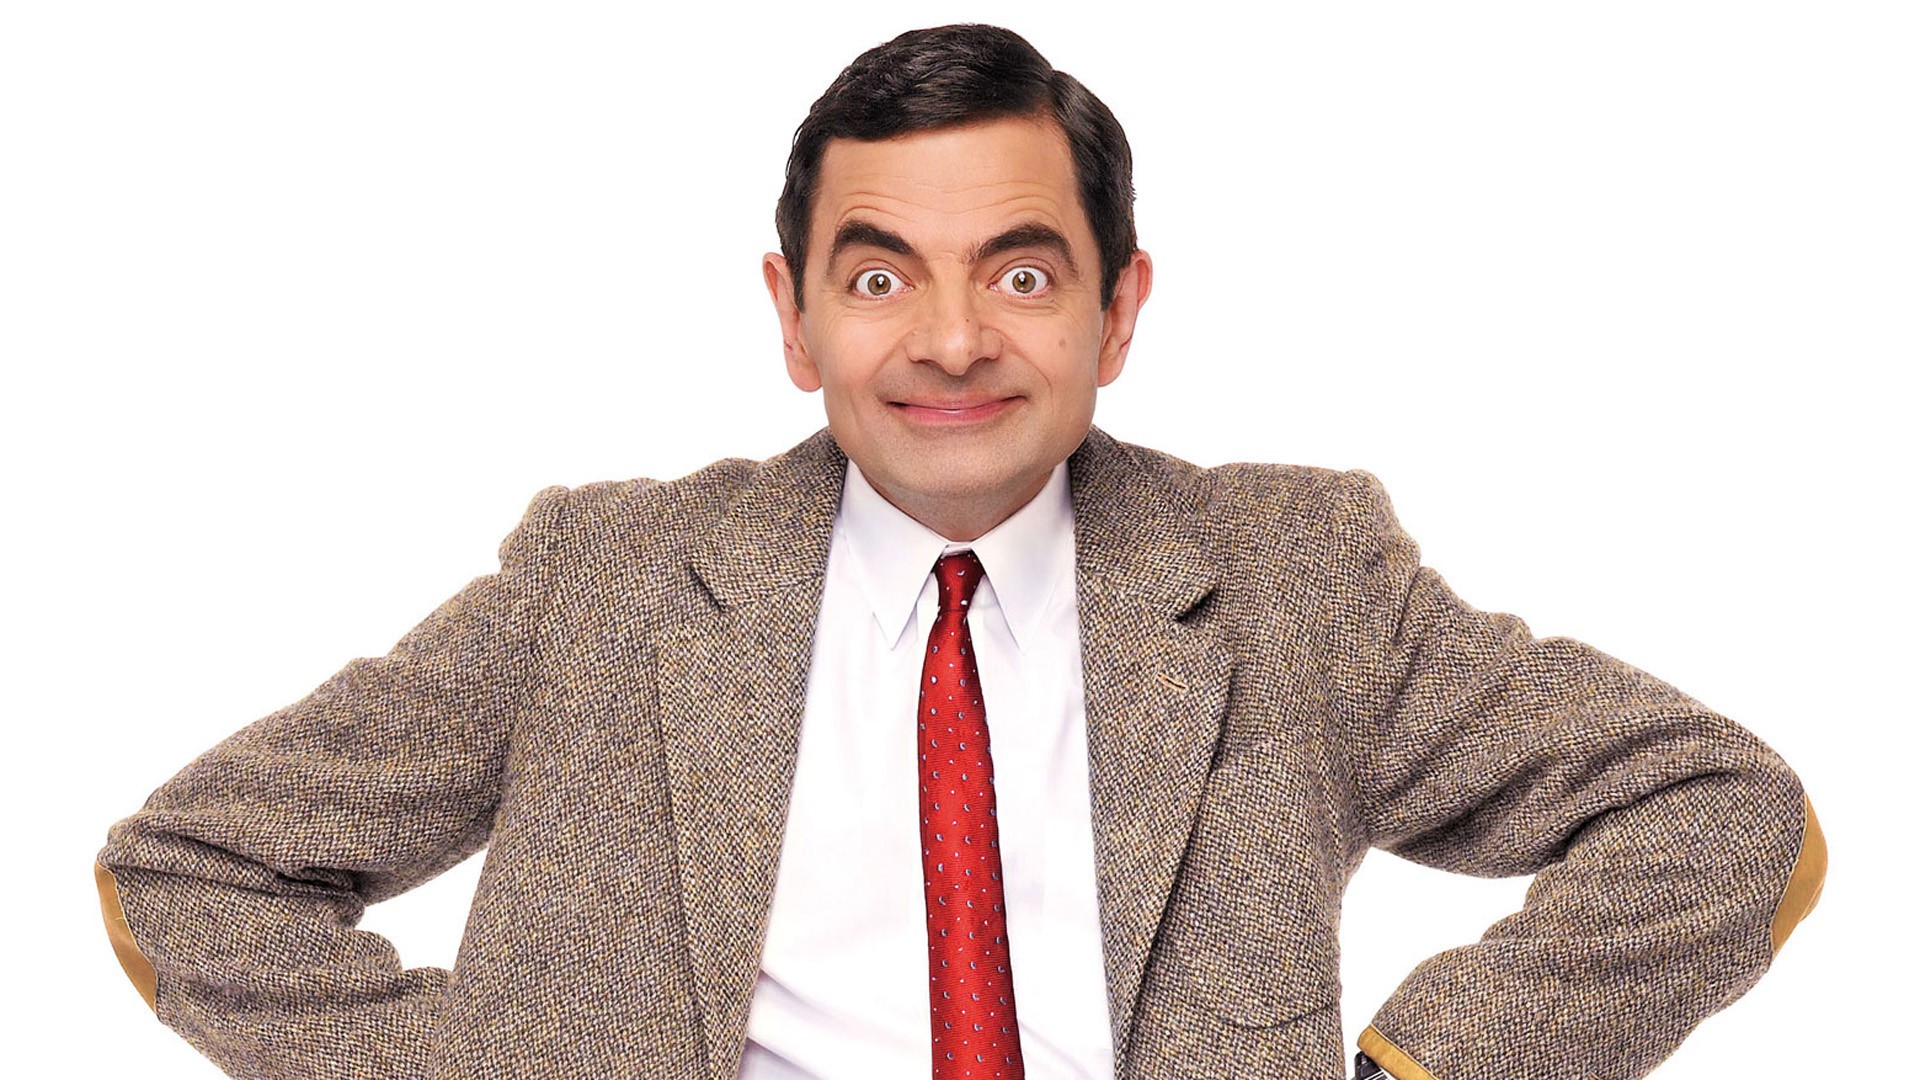 People 1920x1080 movies Mr. Bean Rowan Atkinson men actor smiling suits tie white background TV series